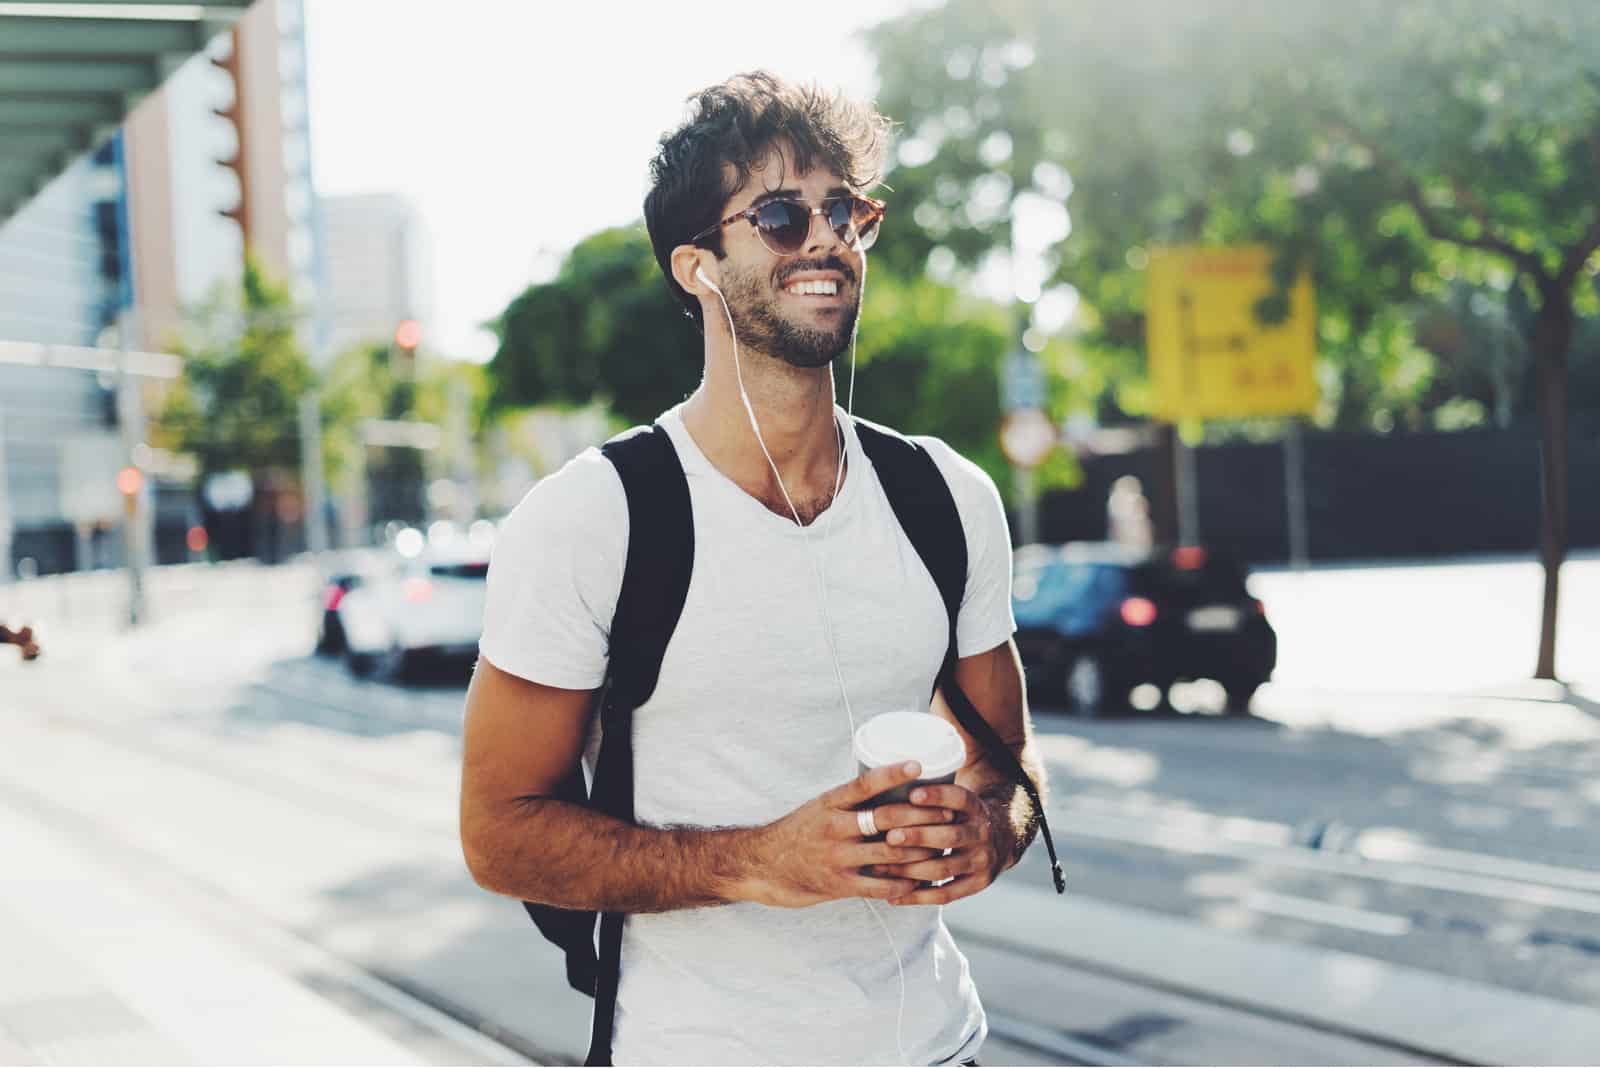 a smiling man walks down the street